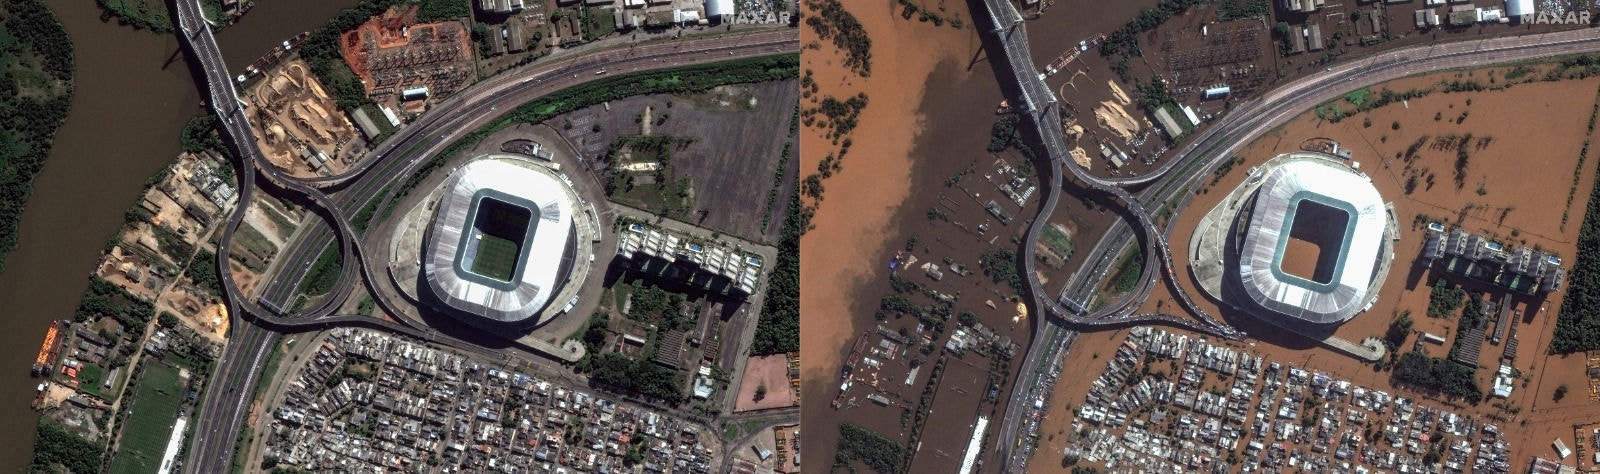 Estádio Beira-Rio antes e depois de enchente